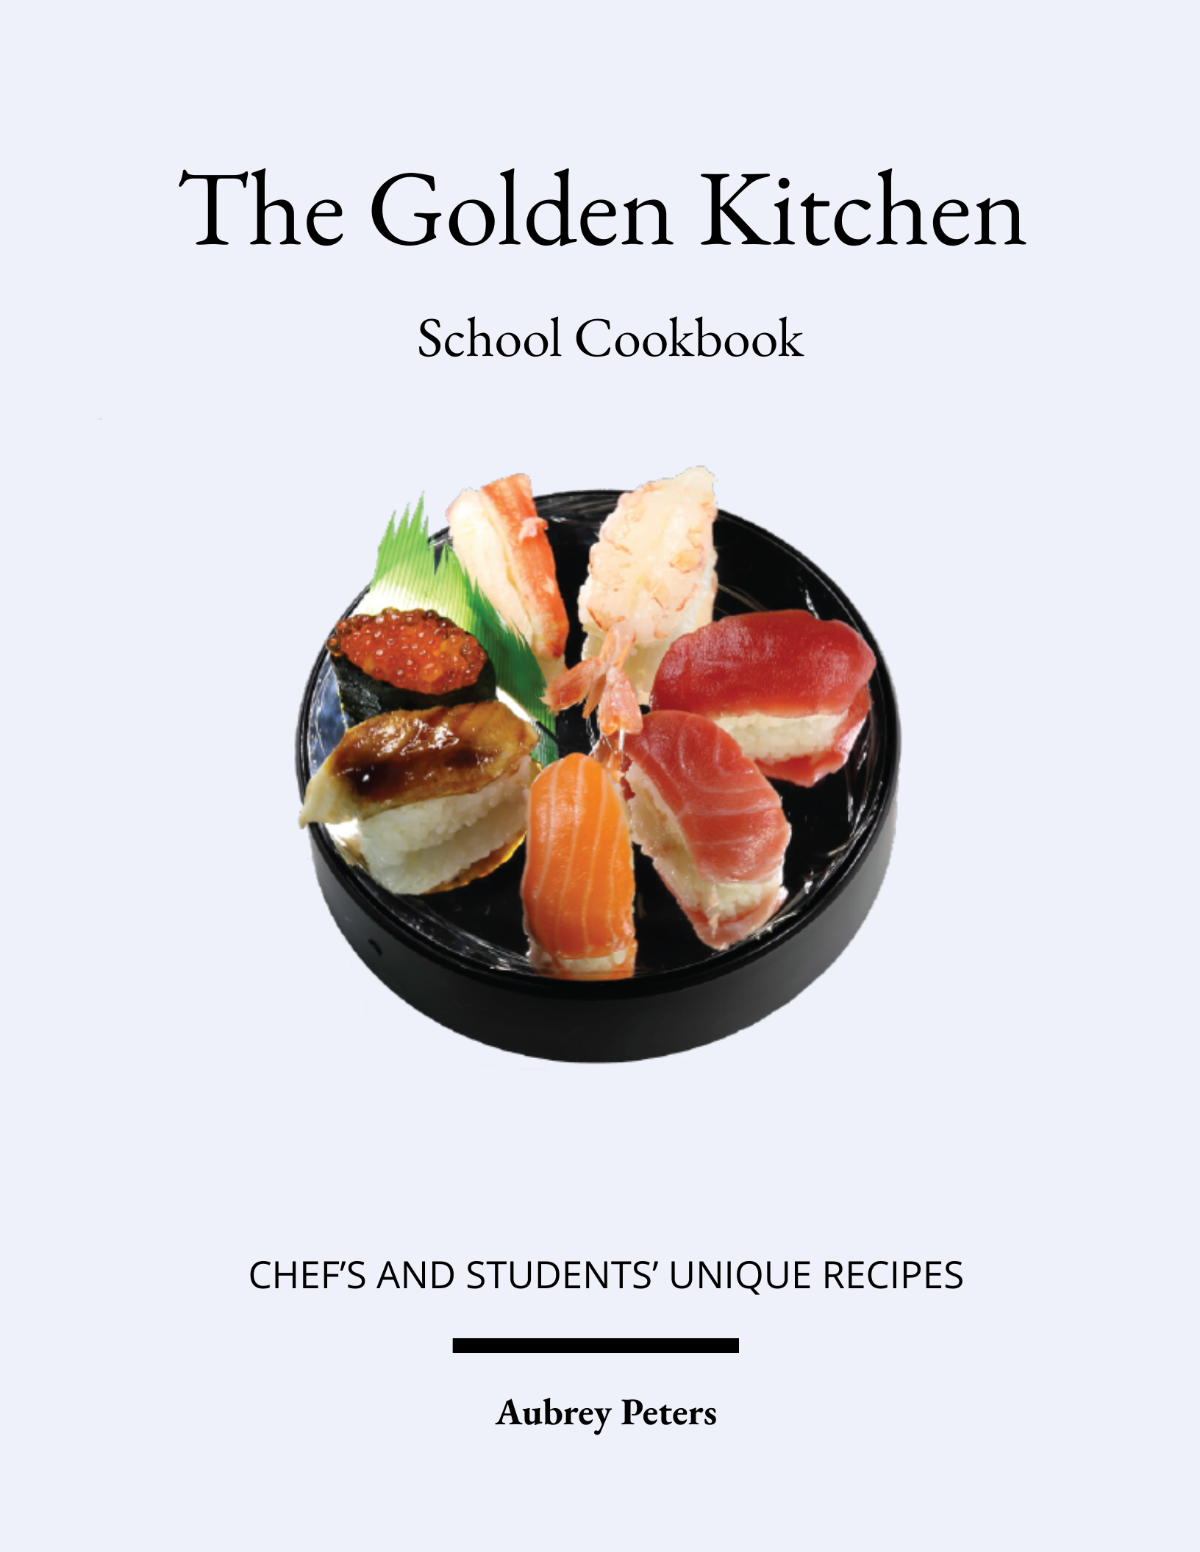 Free Simple School Cookbook Template